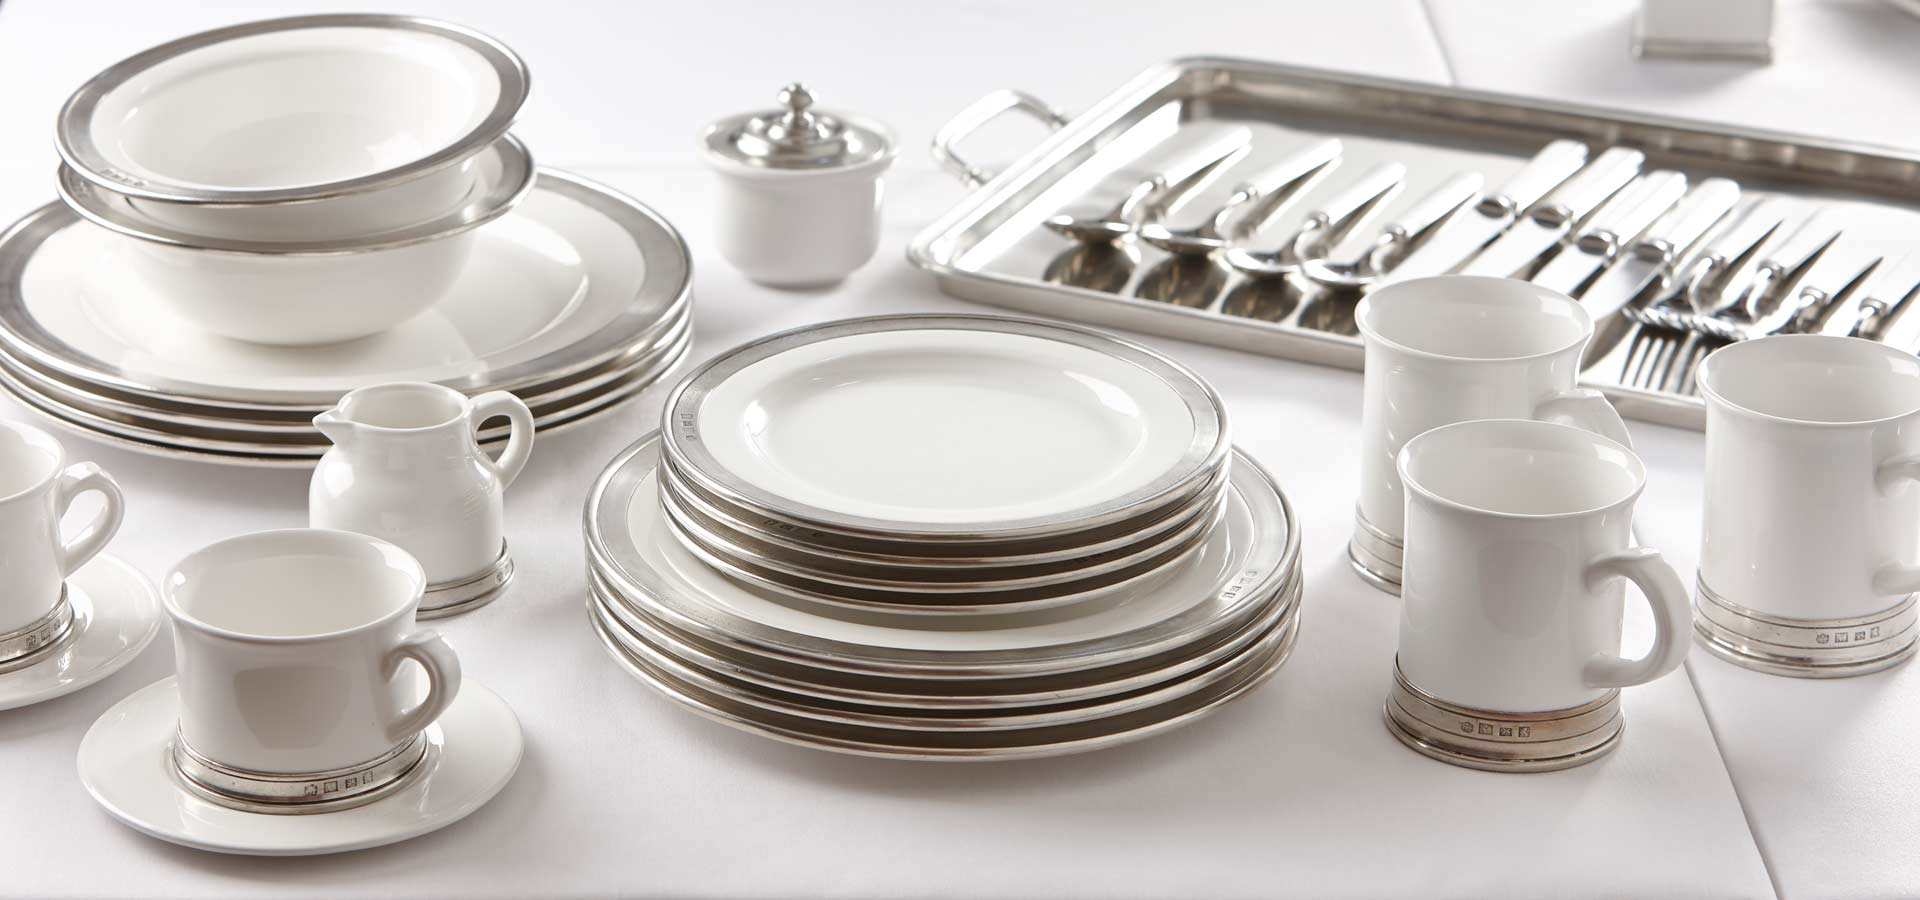 dish sets, dinner plates